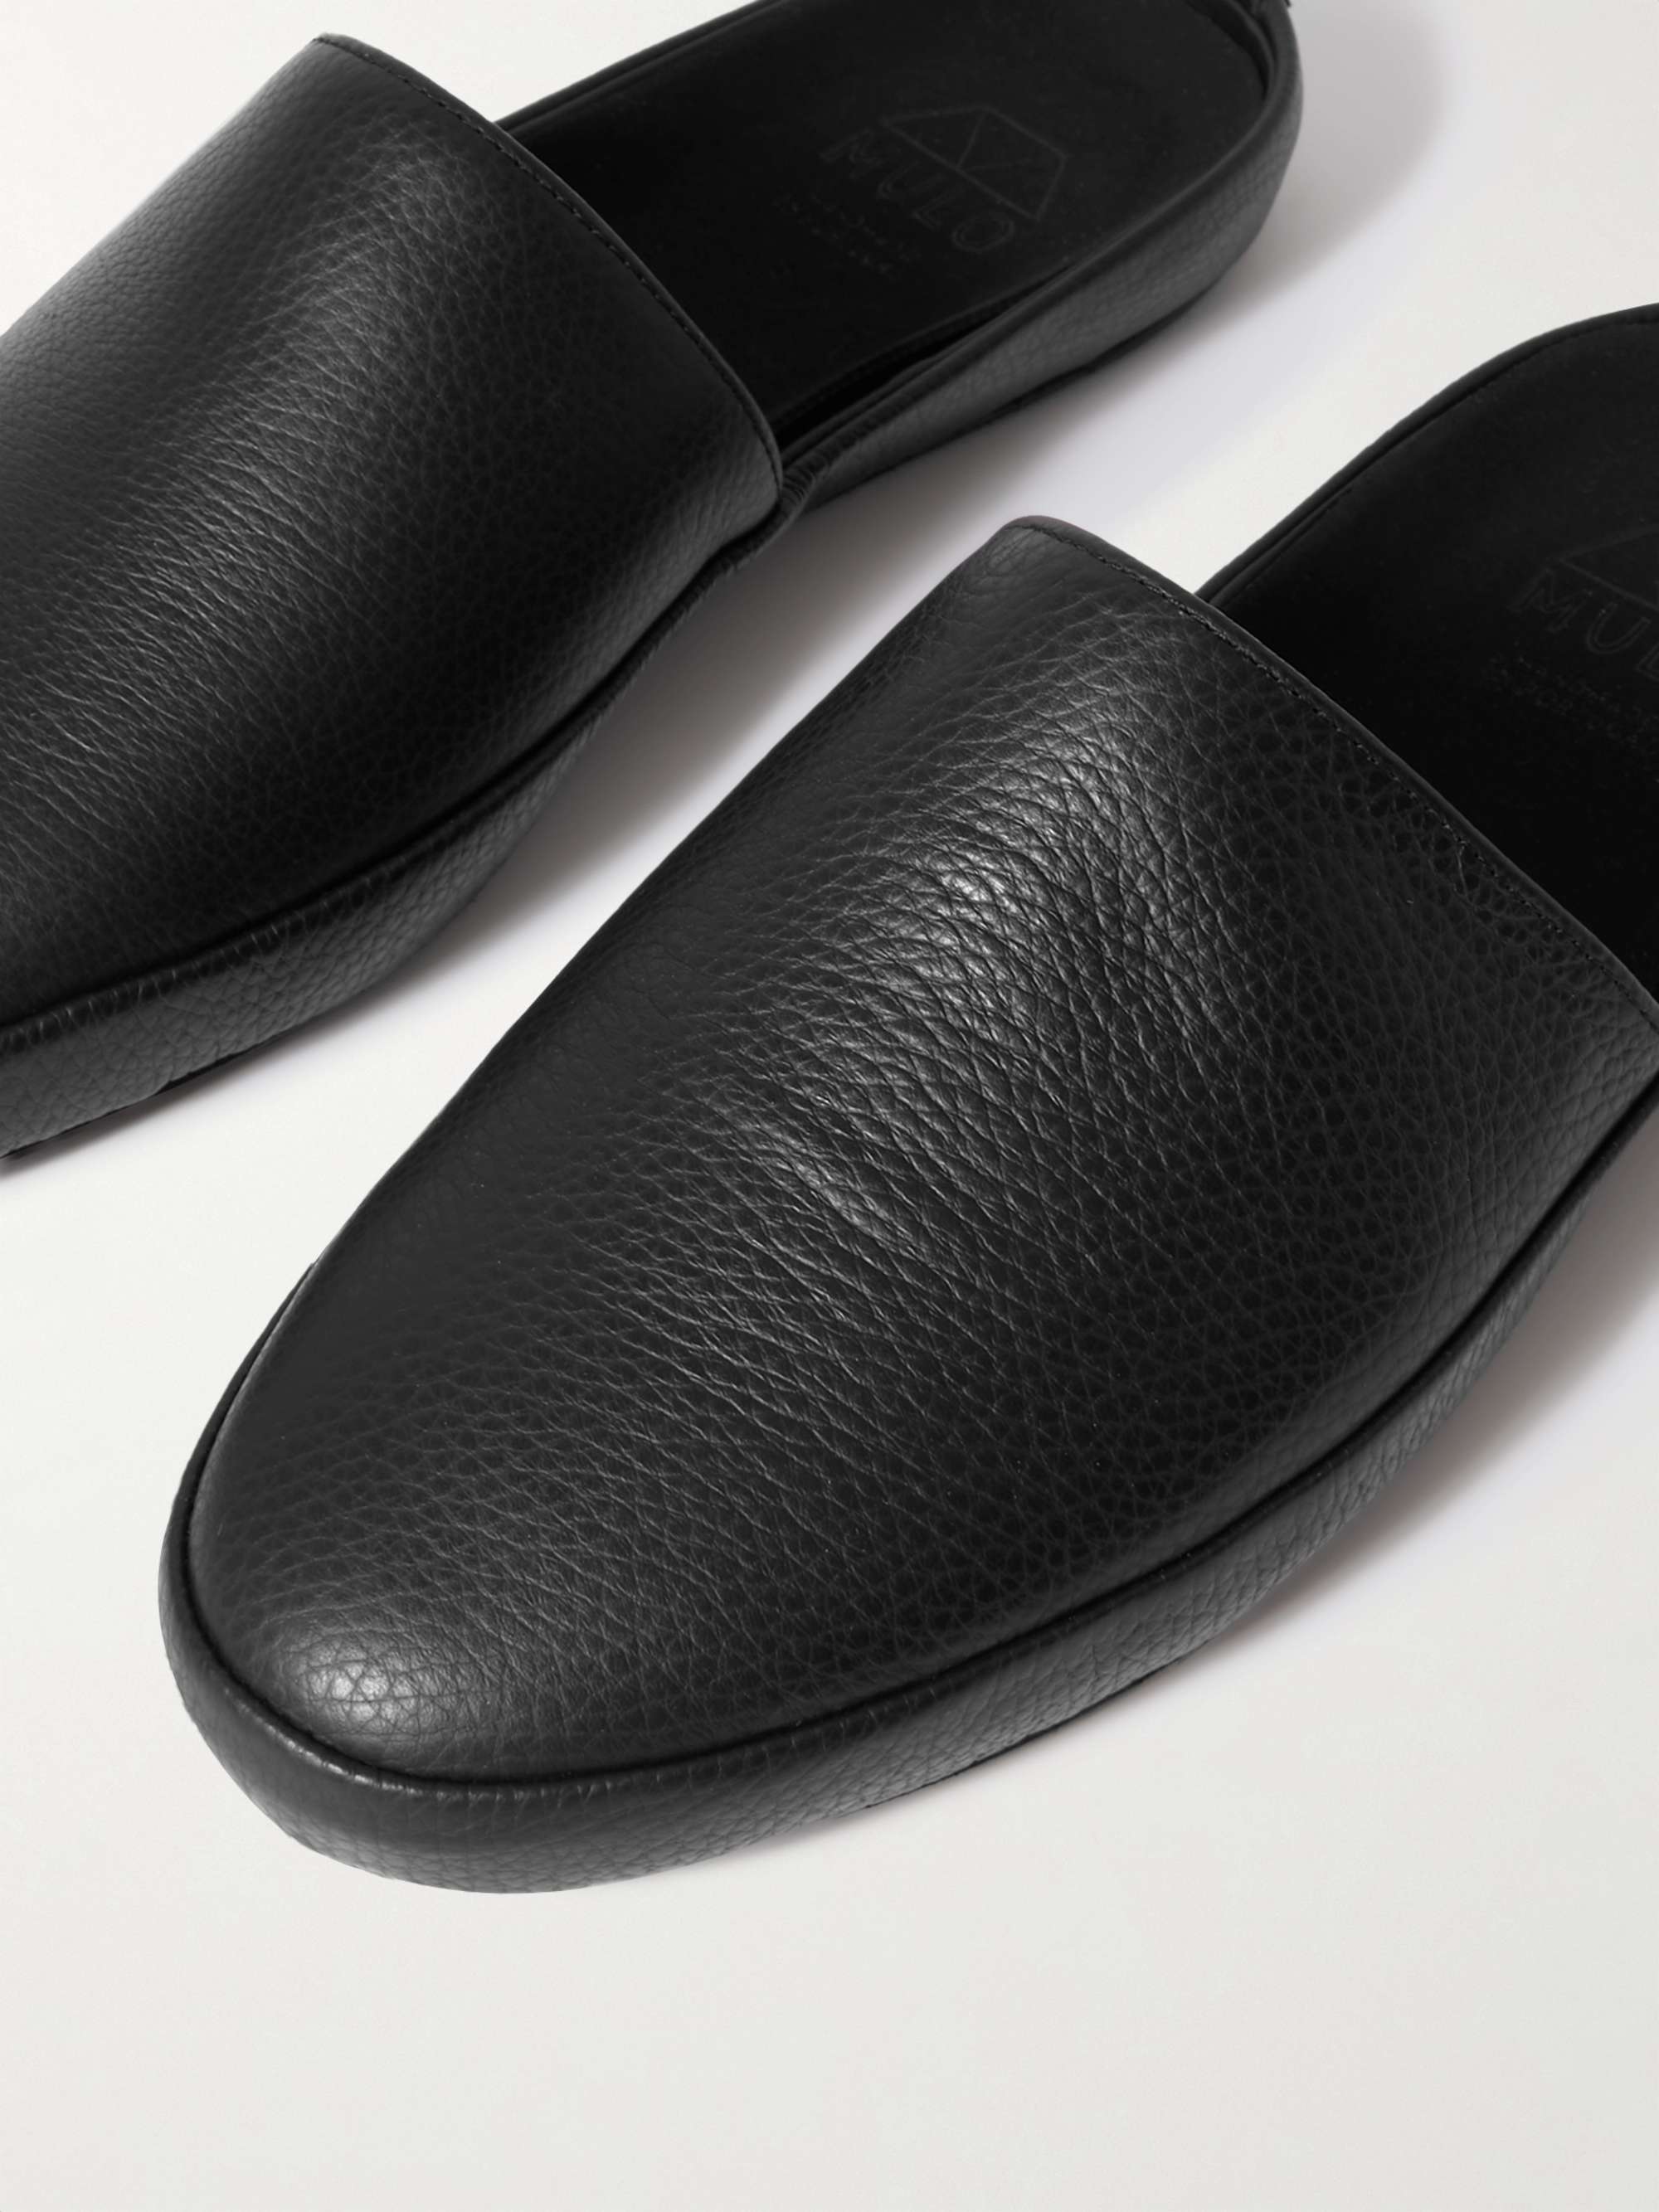 MULO Full-Grain Leather Slippers